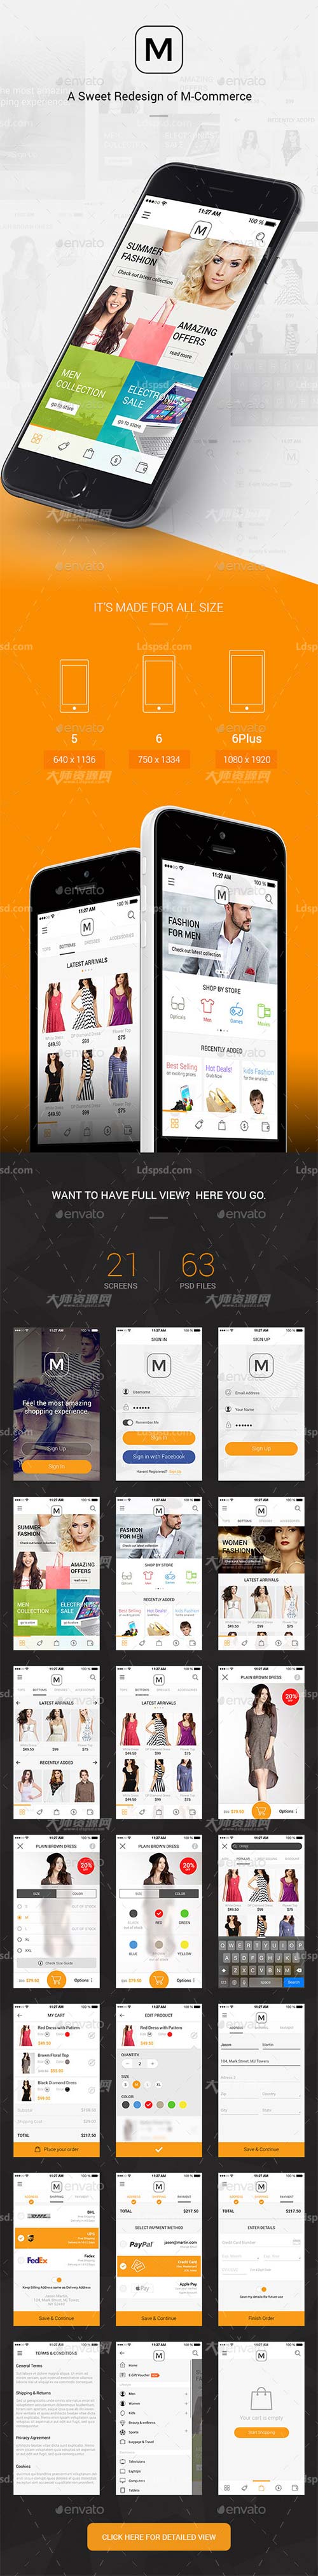 M - A Sweet Redesign Of M-Commerce,UI设计－产品销售(商城类)